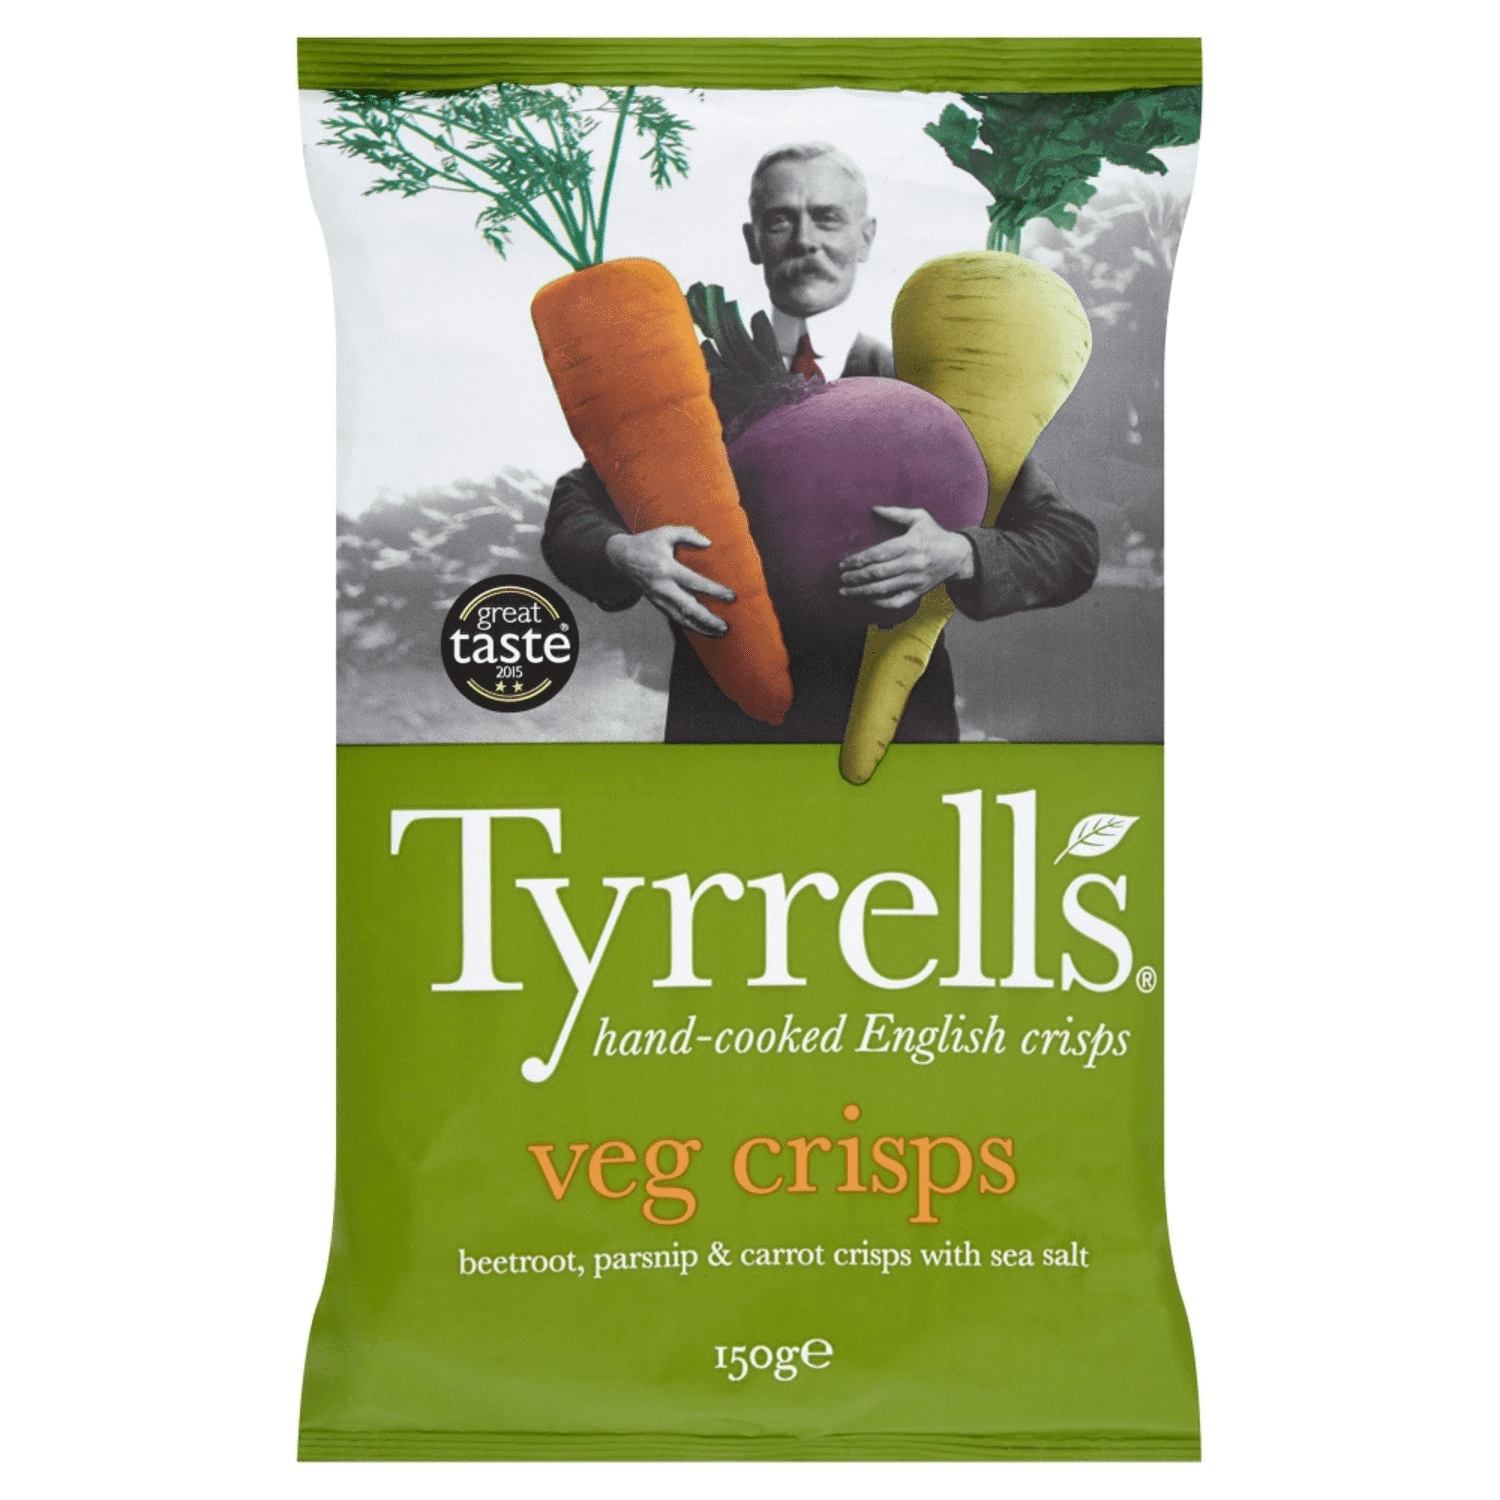 Chips Veg Crisps légumes, 150g - TYRRELL'S